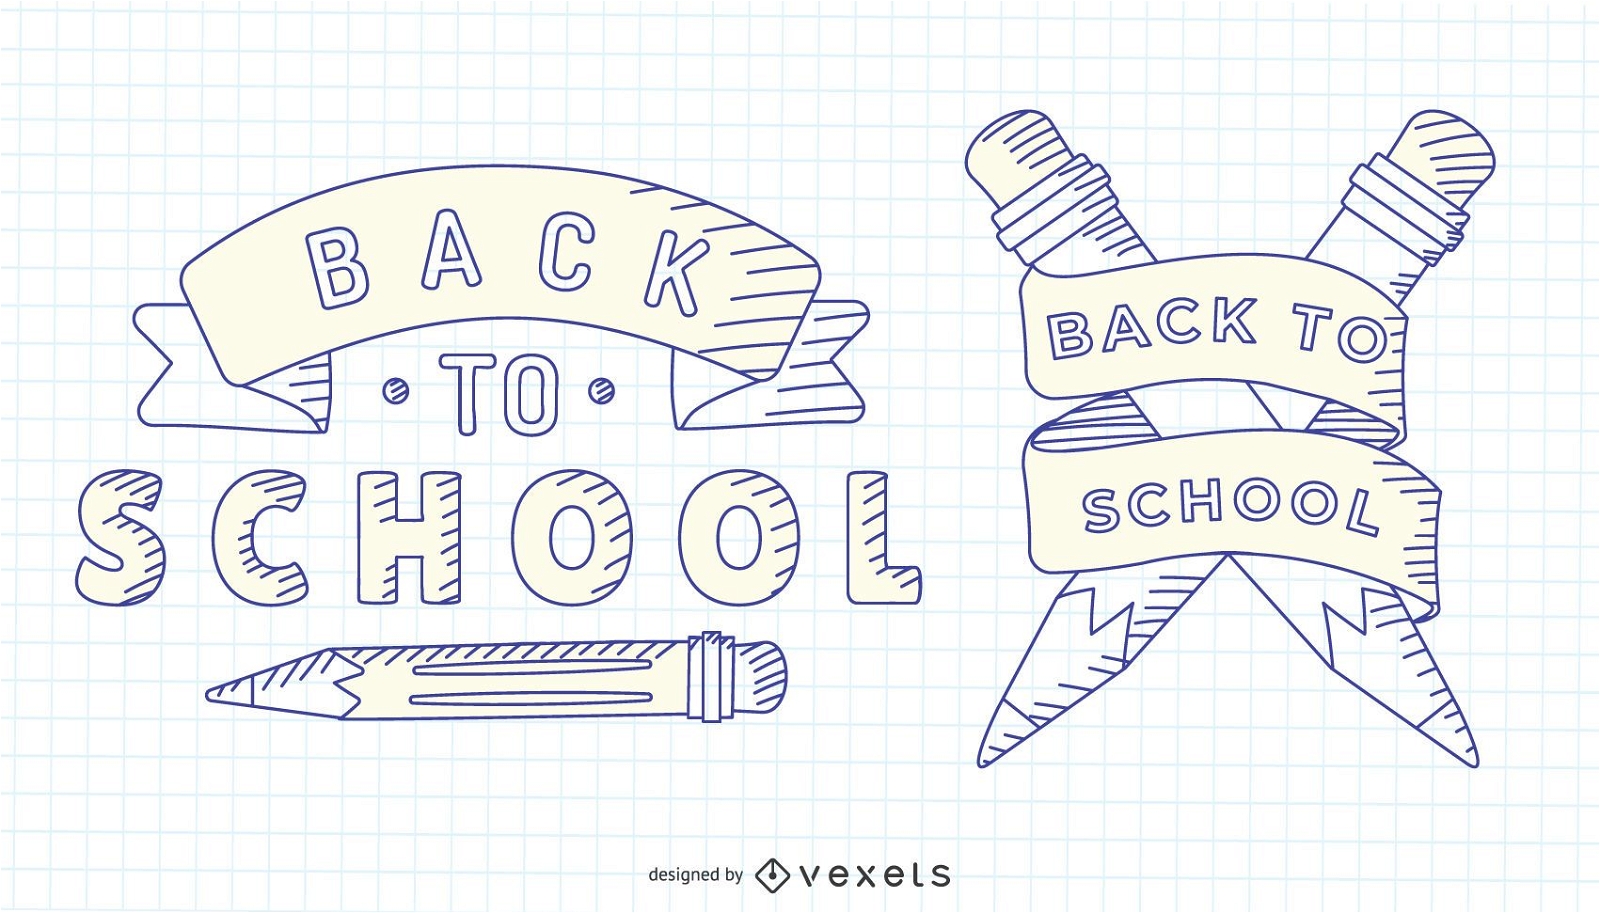 Back to school hand drawn label set